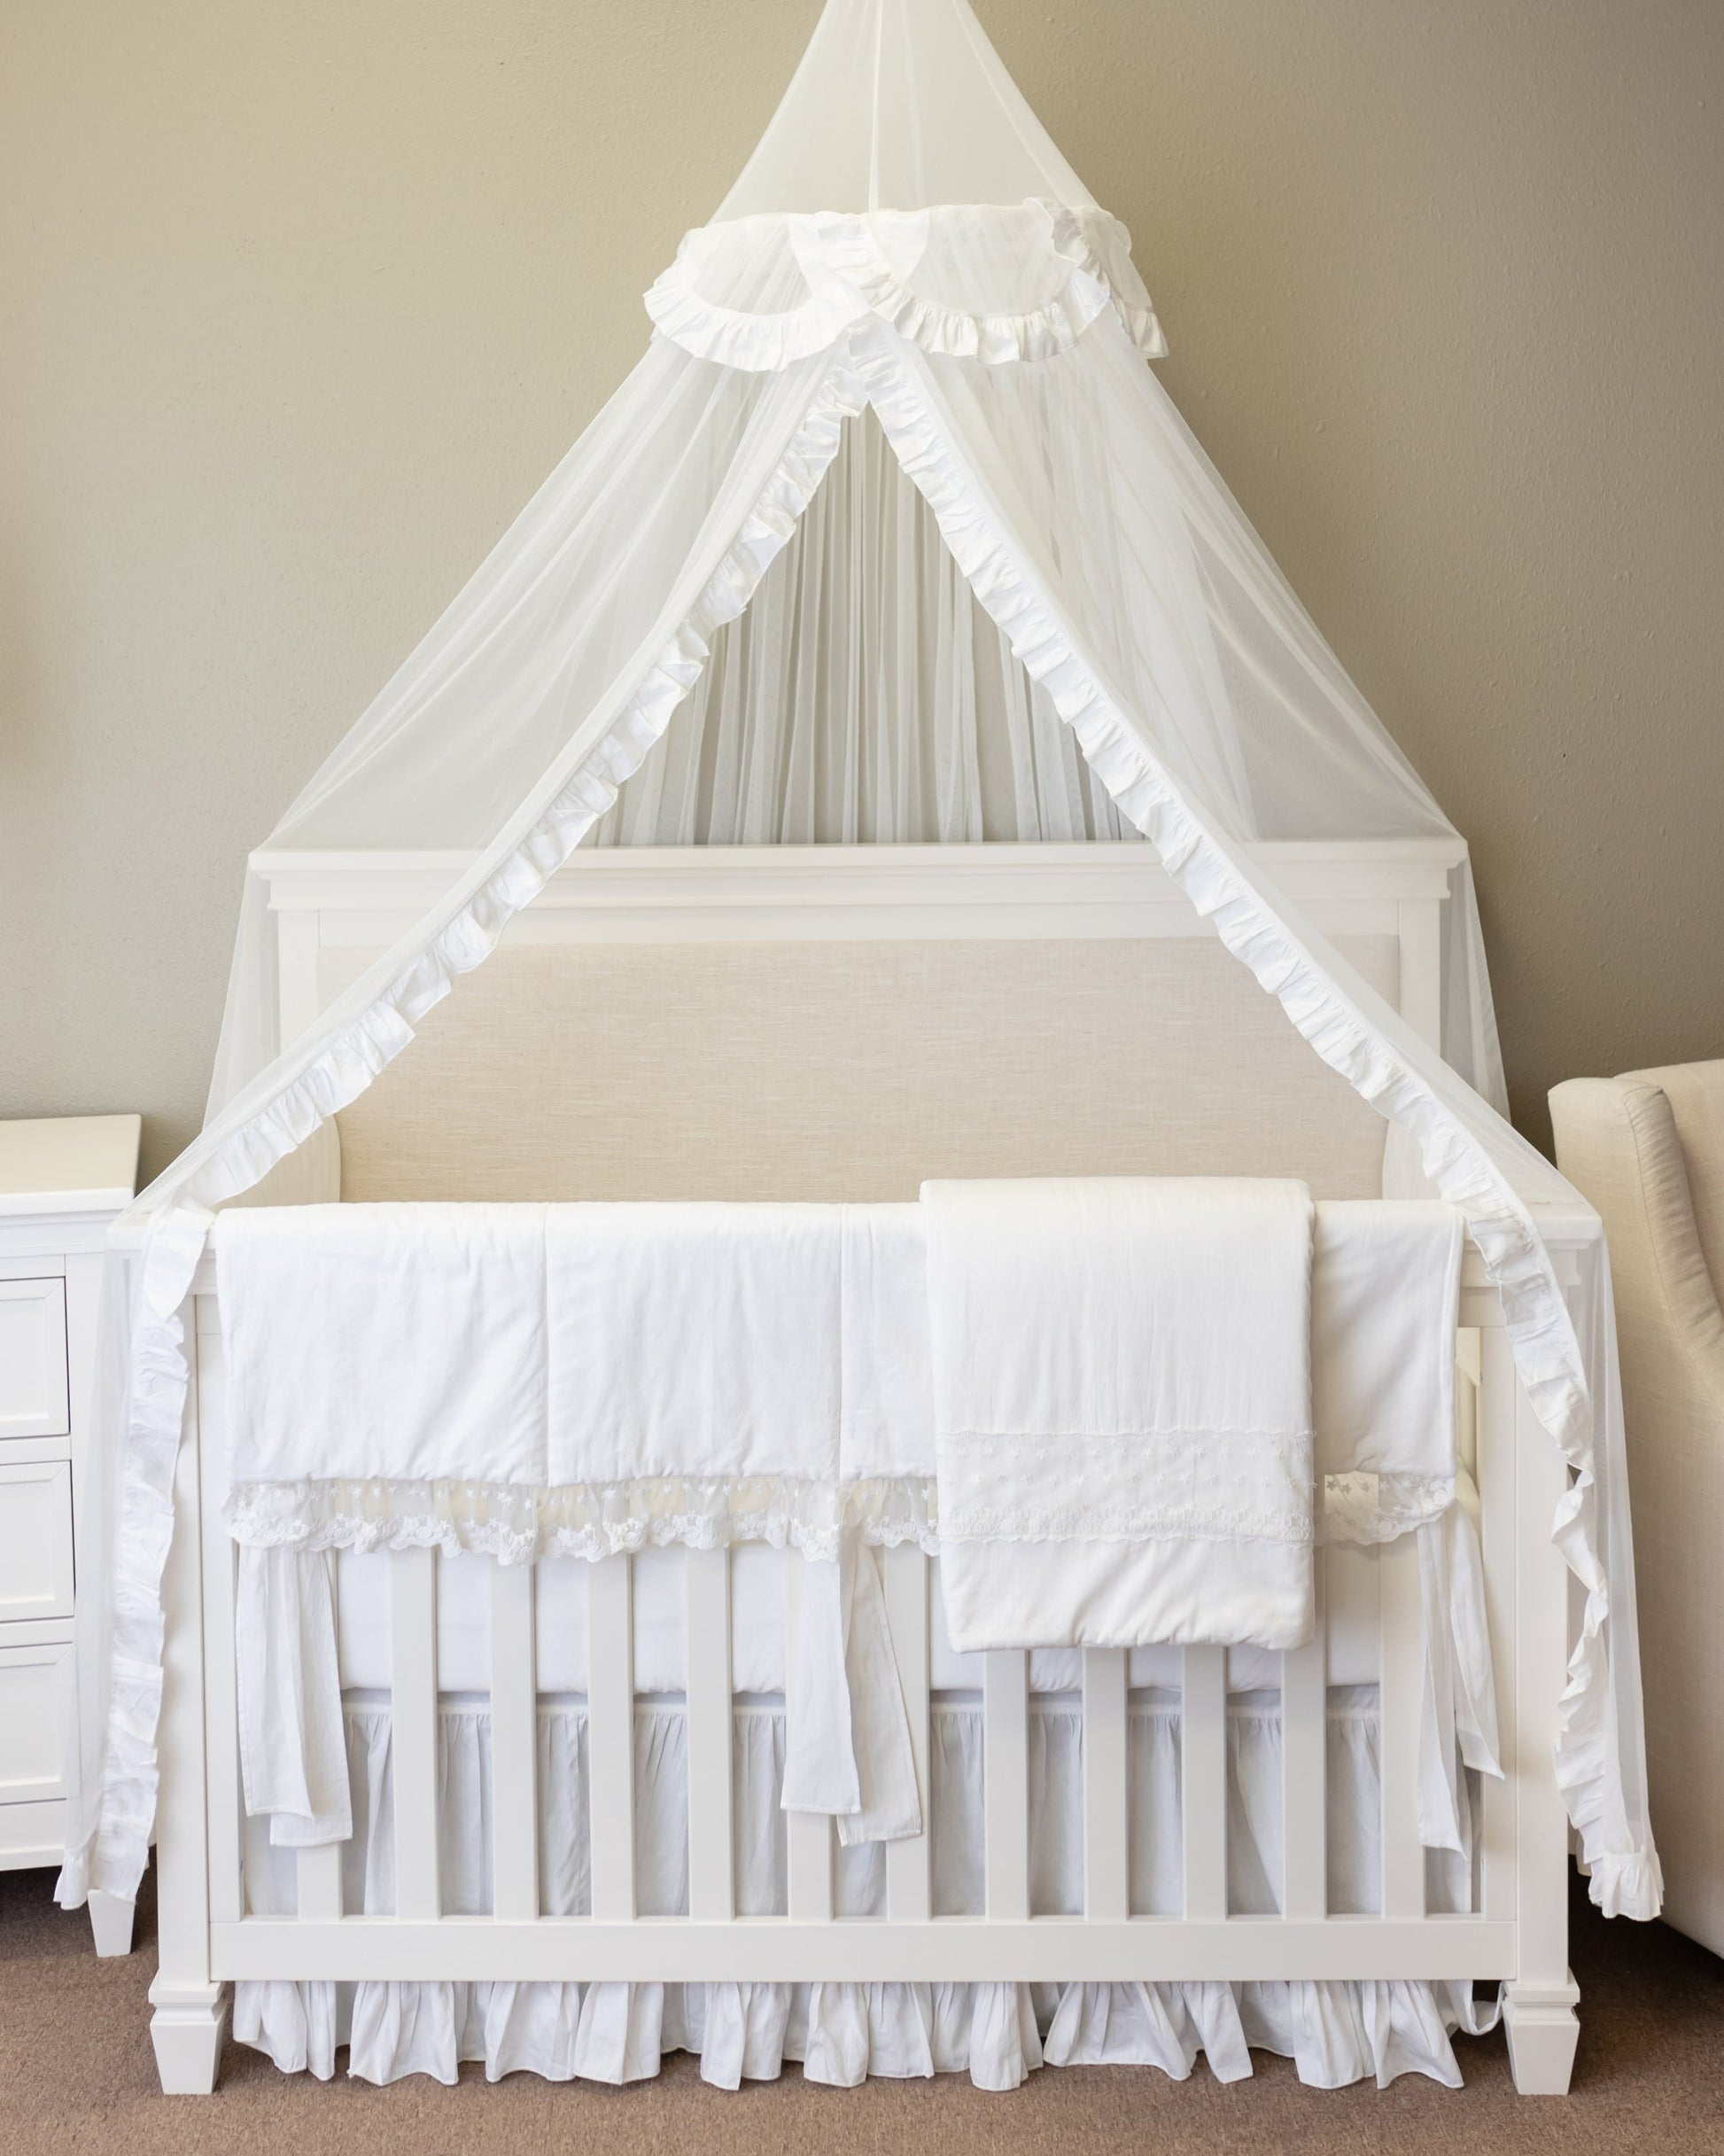 Tulle Canopy for White Innocence Nursery Bedding